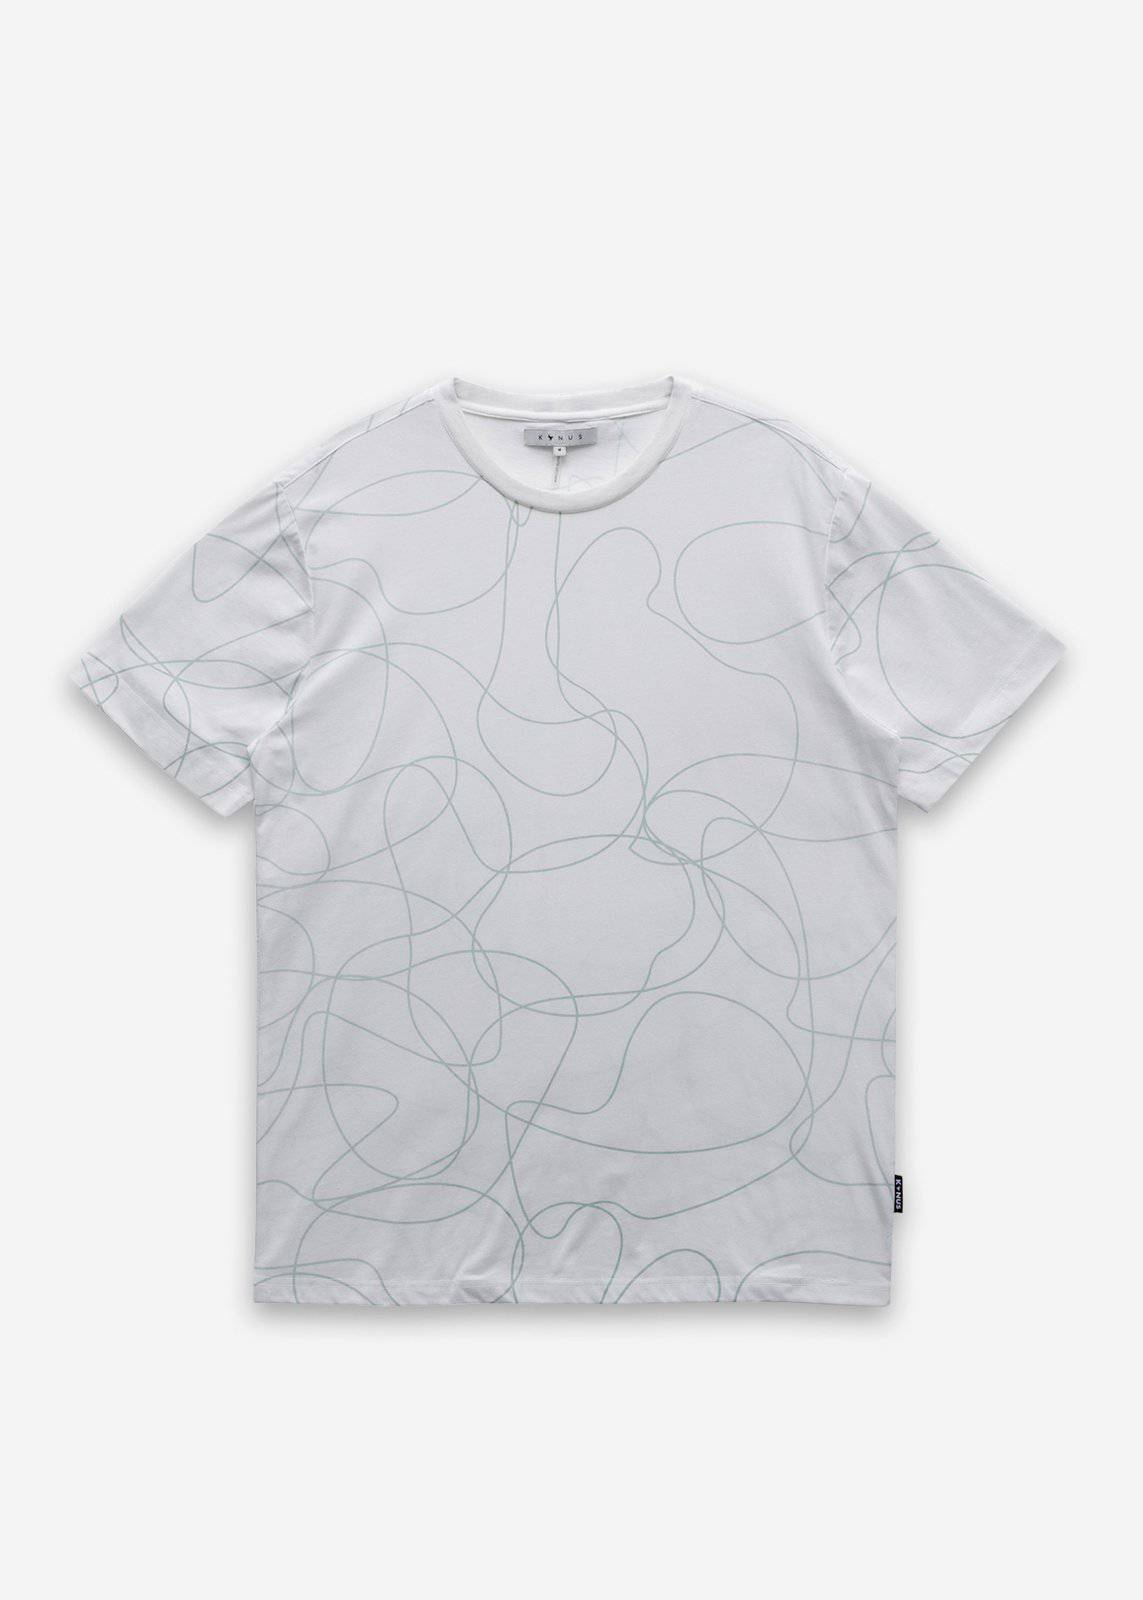 Konus Men's Linework Print T-shirt  in White by Shop at Konus